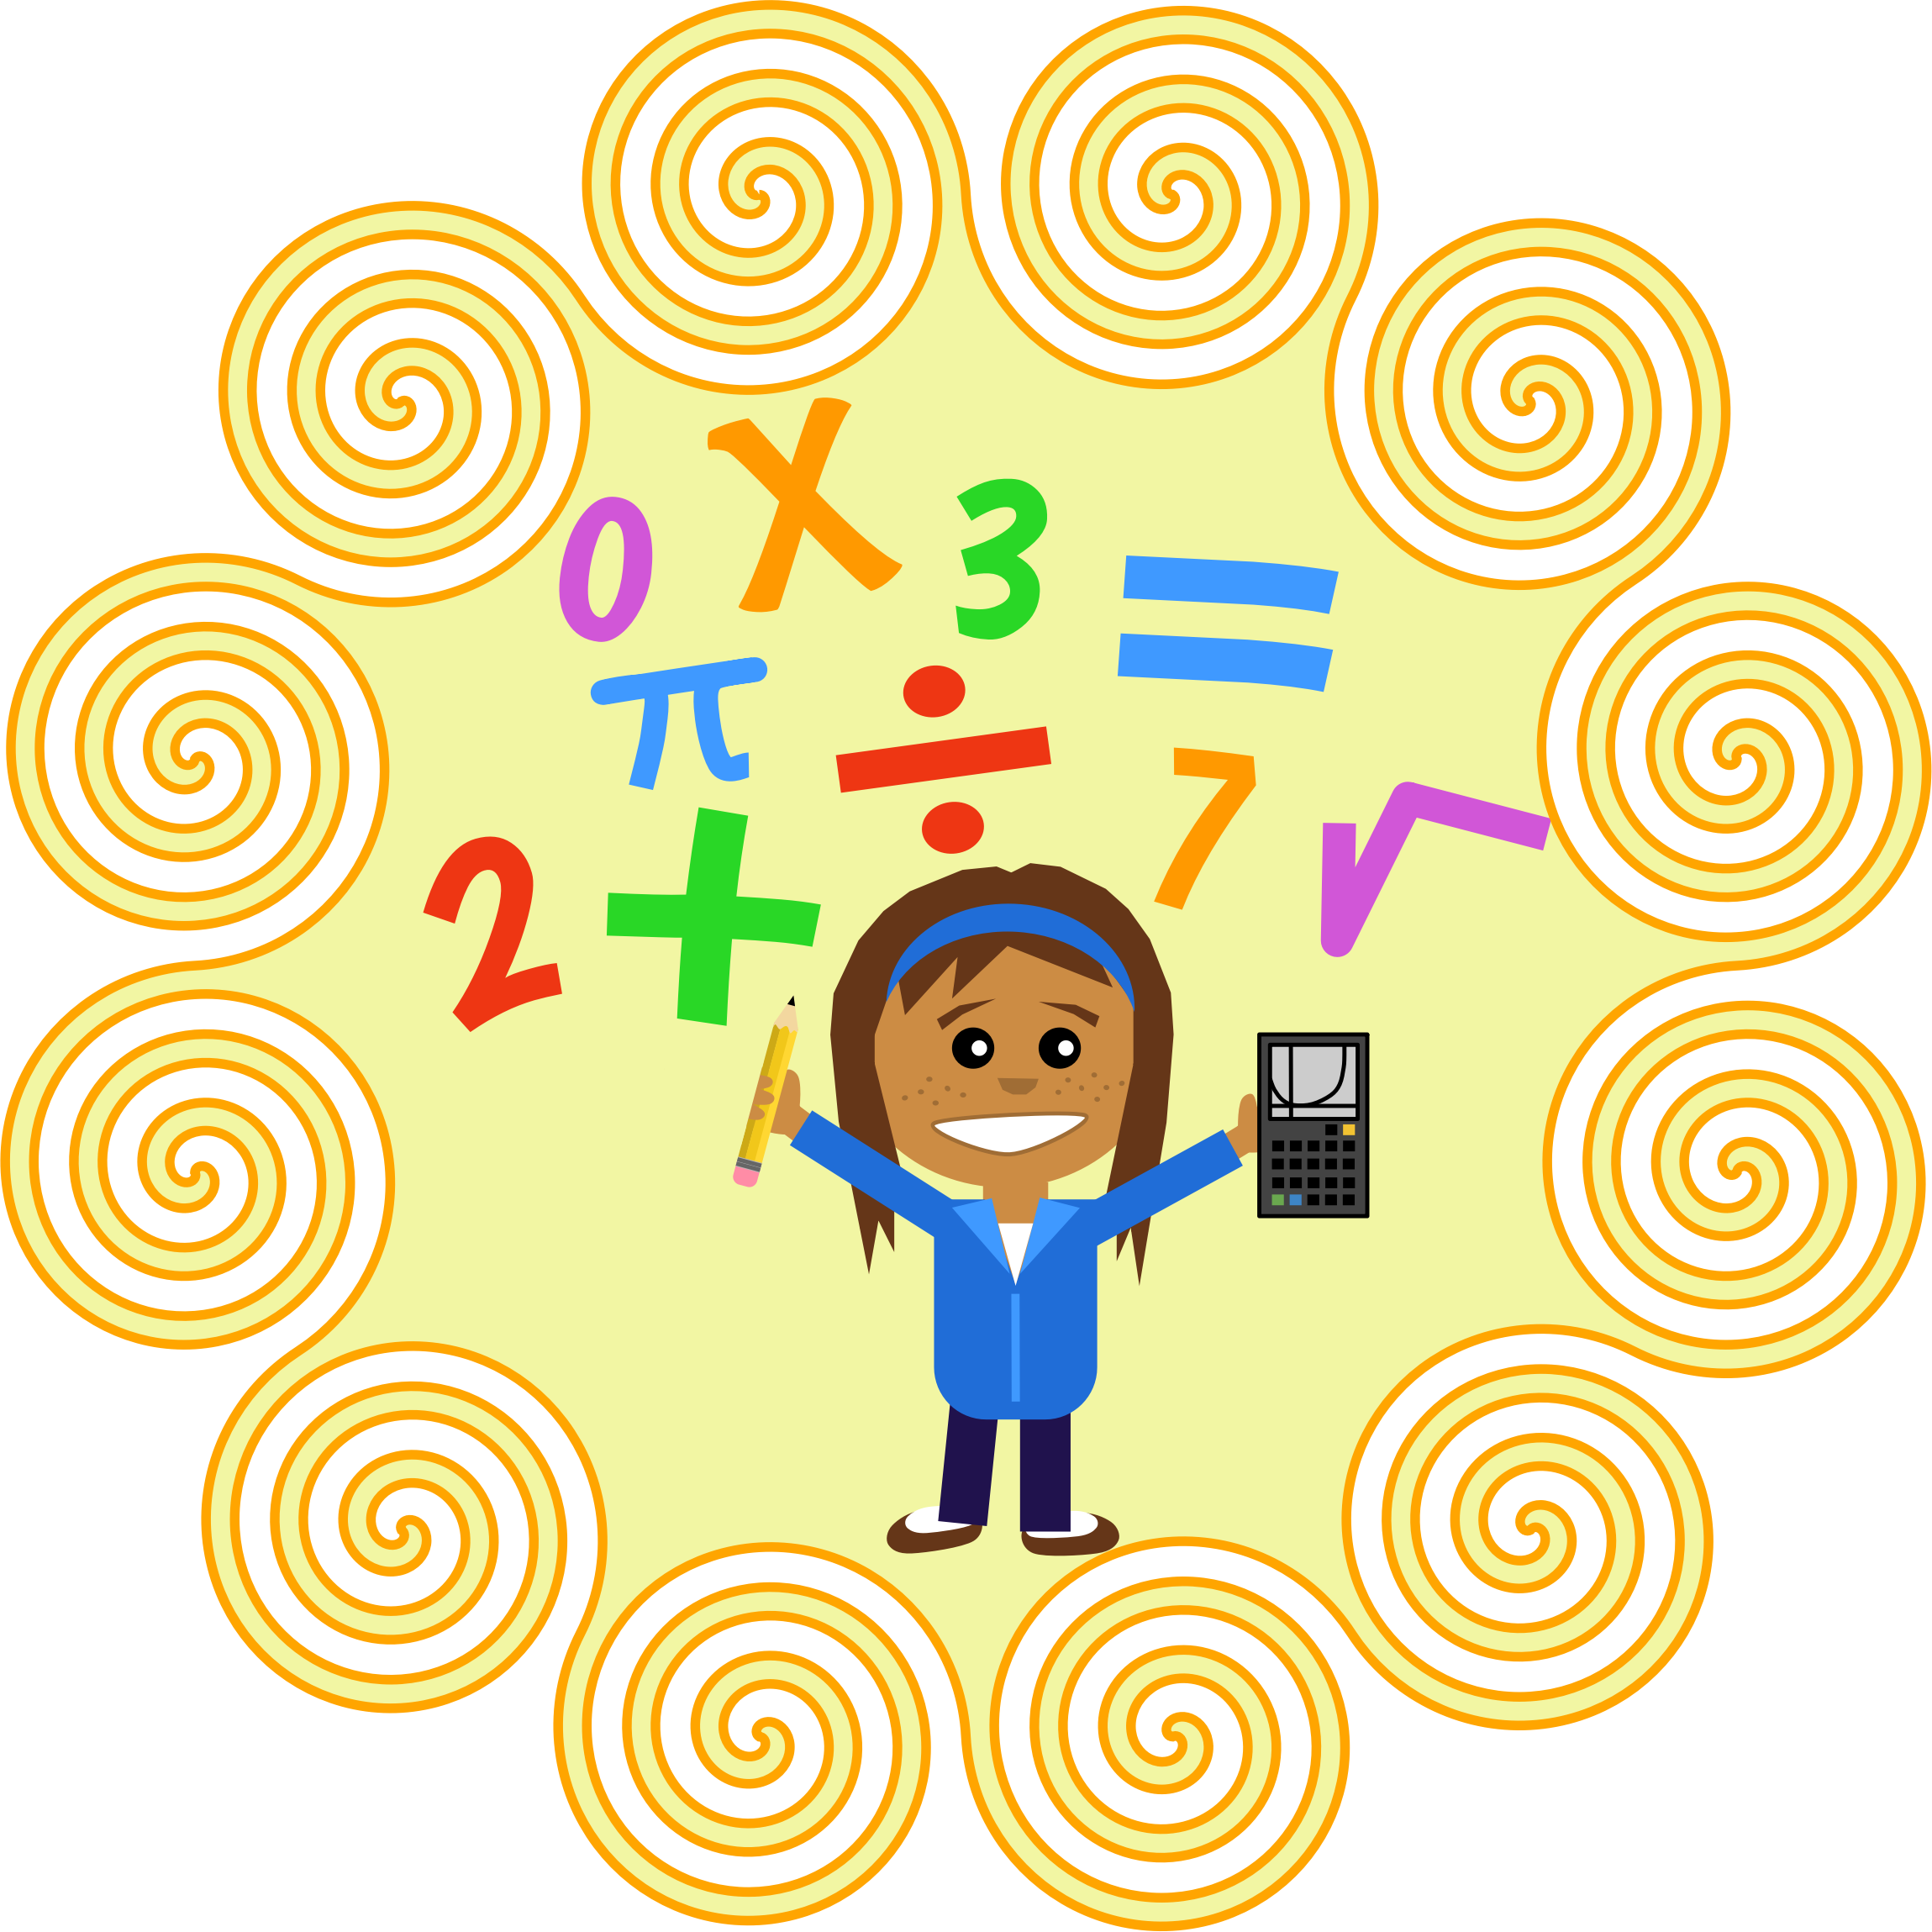 A Cartoon Of A Girl Holding A Calculator And Math Symbols